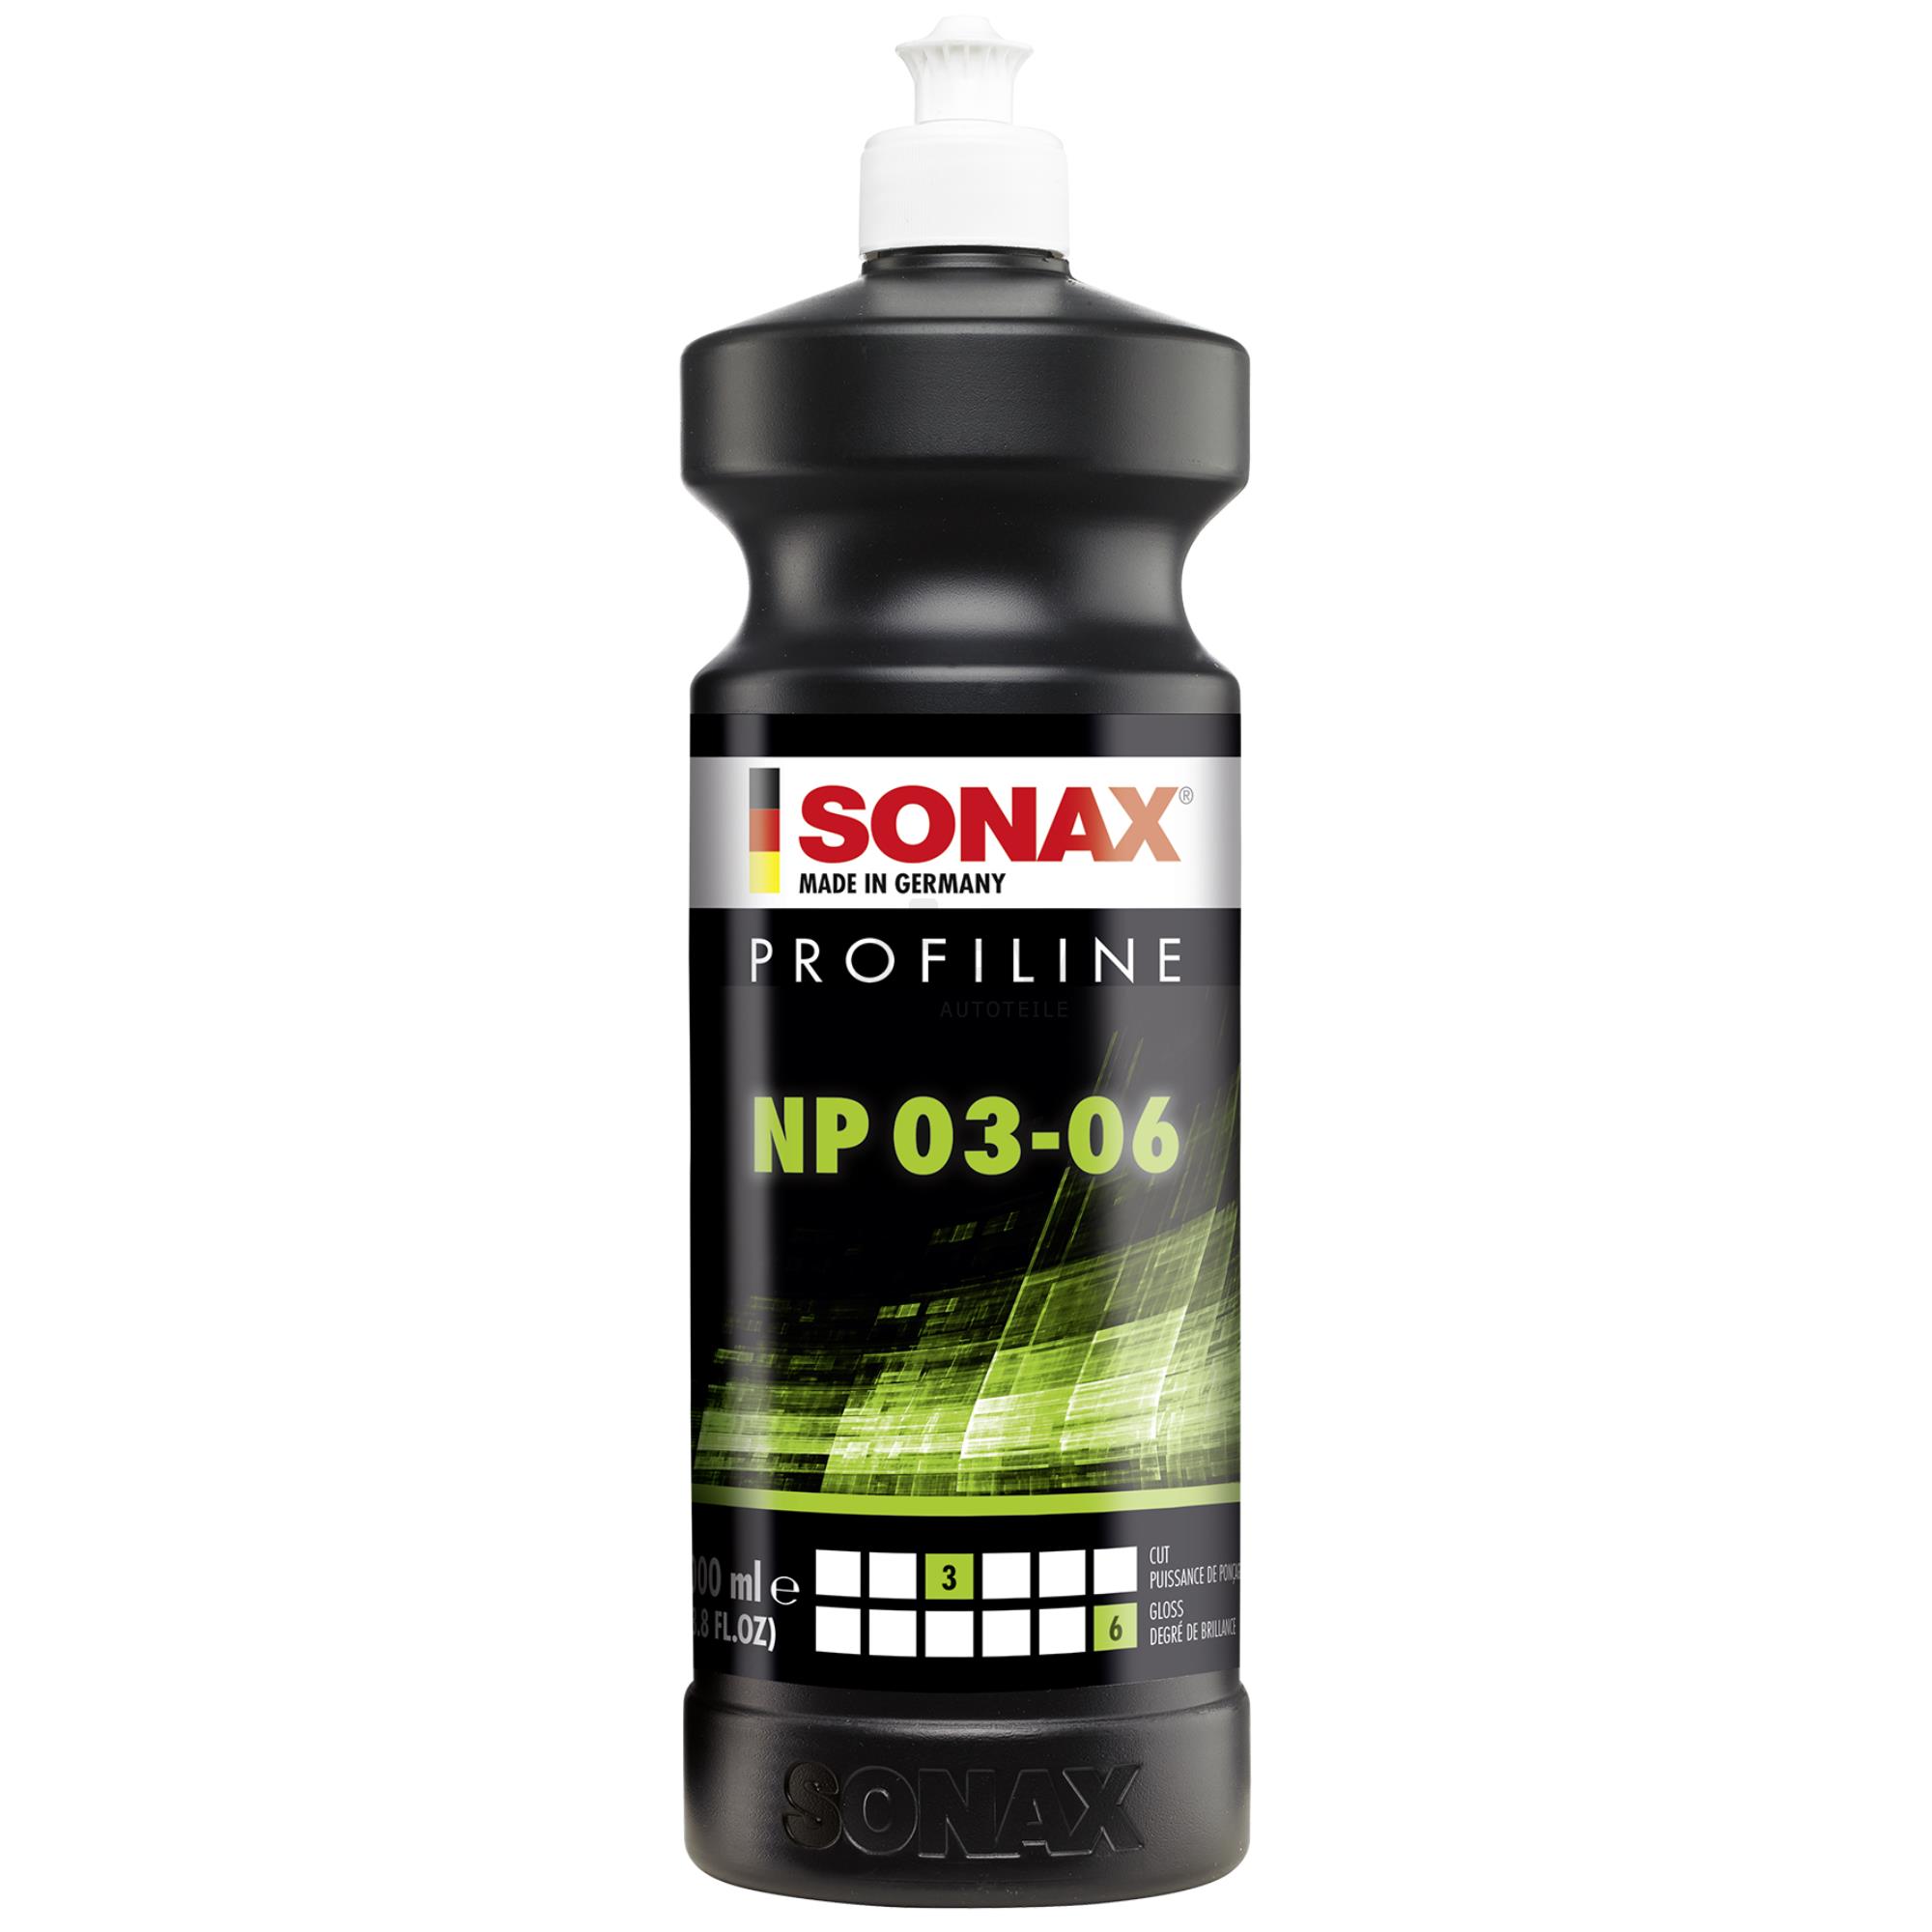 SONAX 02083000 PROFILINE NP 03-06 Politur silikonfrei 1 Liter